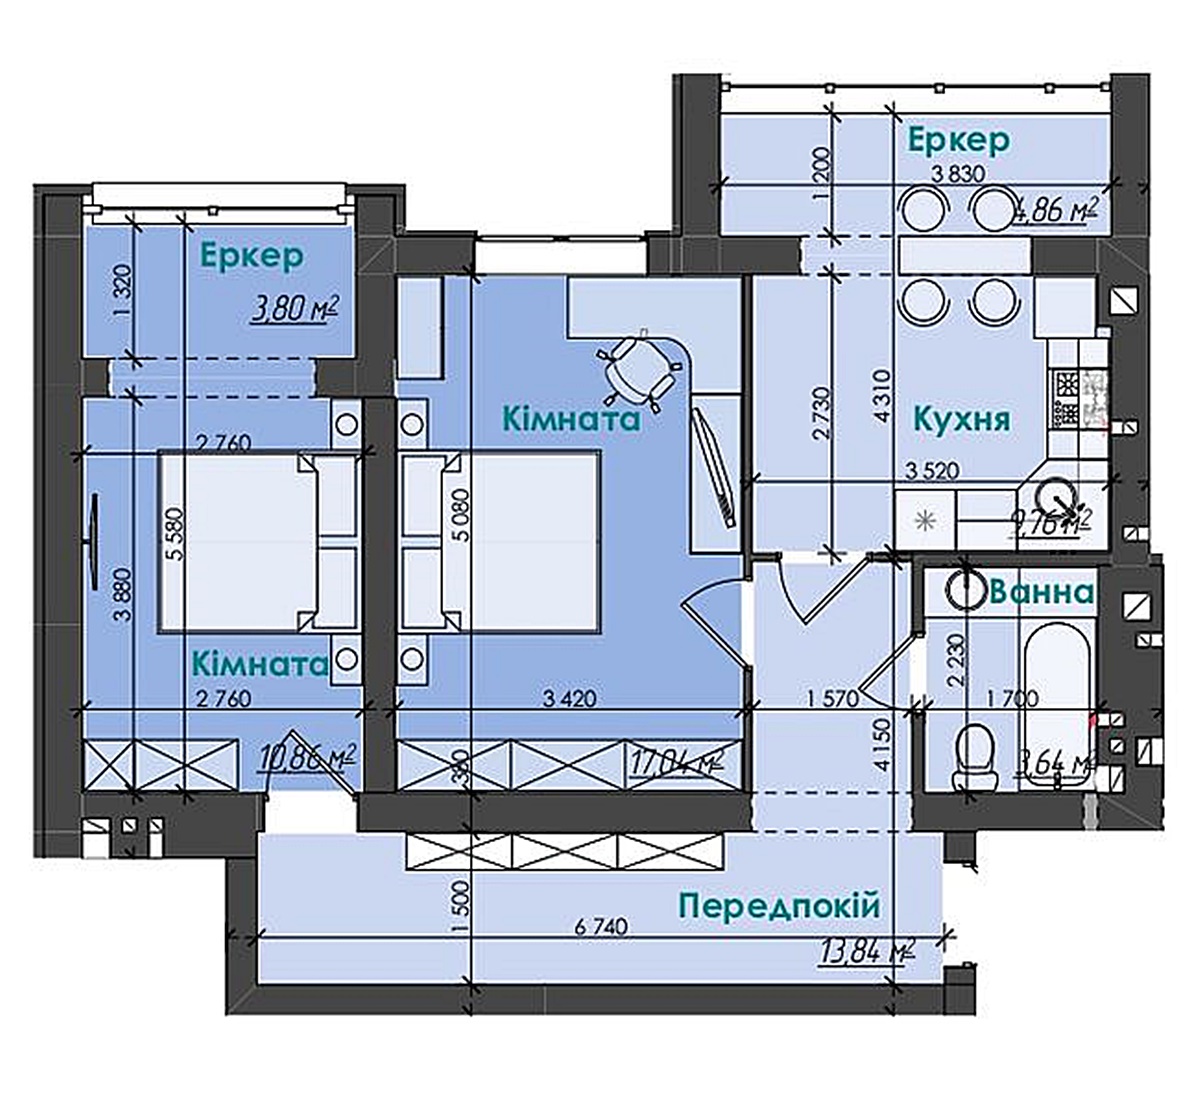 ЖК Like Home вариант планировки двухкомнатной квартиры